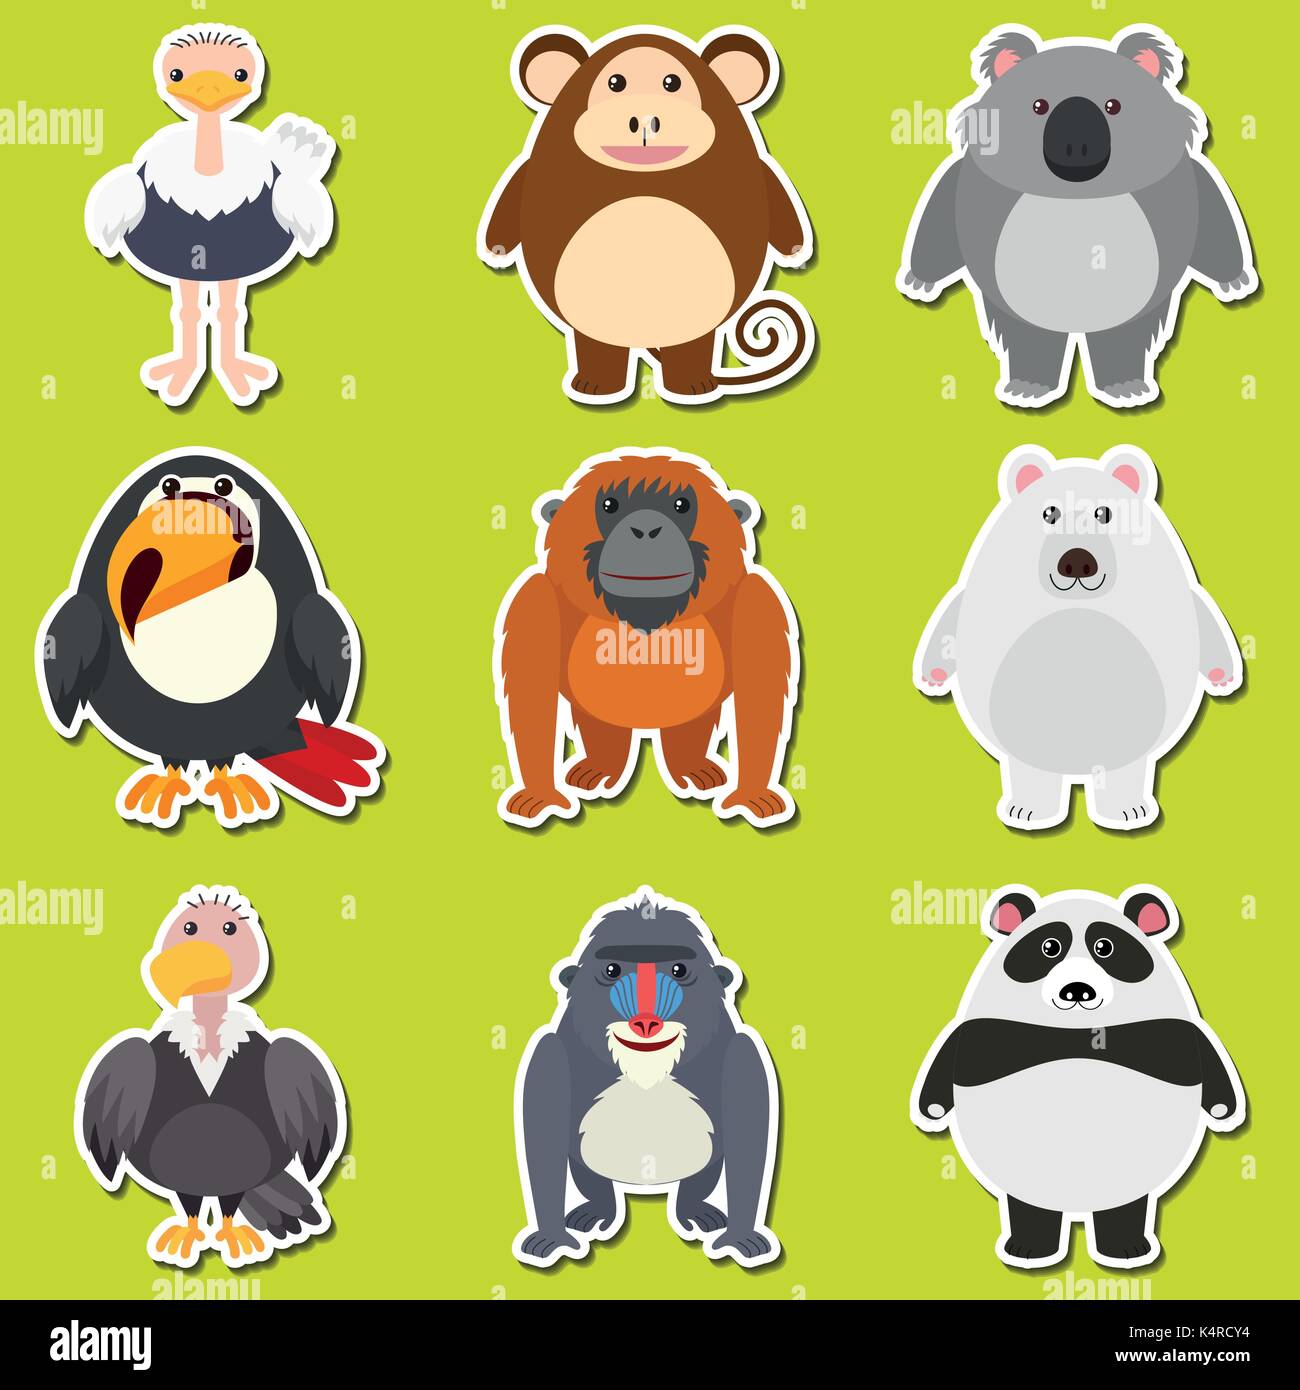 Sticker design for cute animals illustration Stock Vector